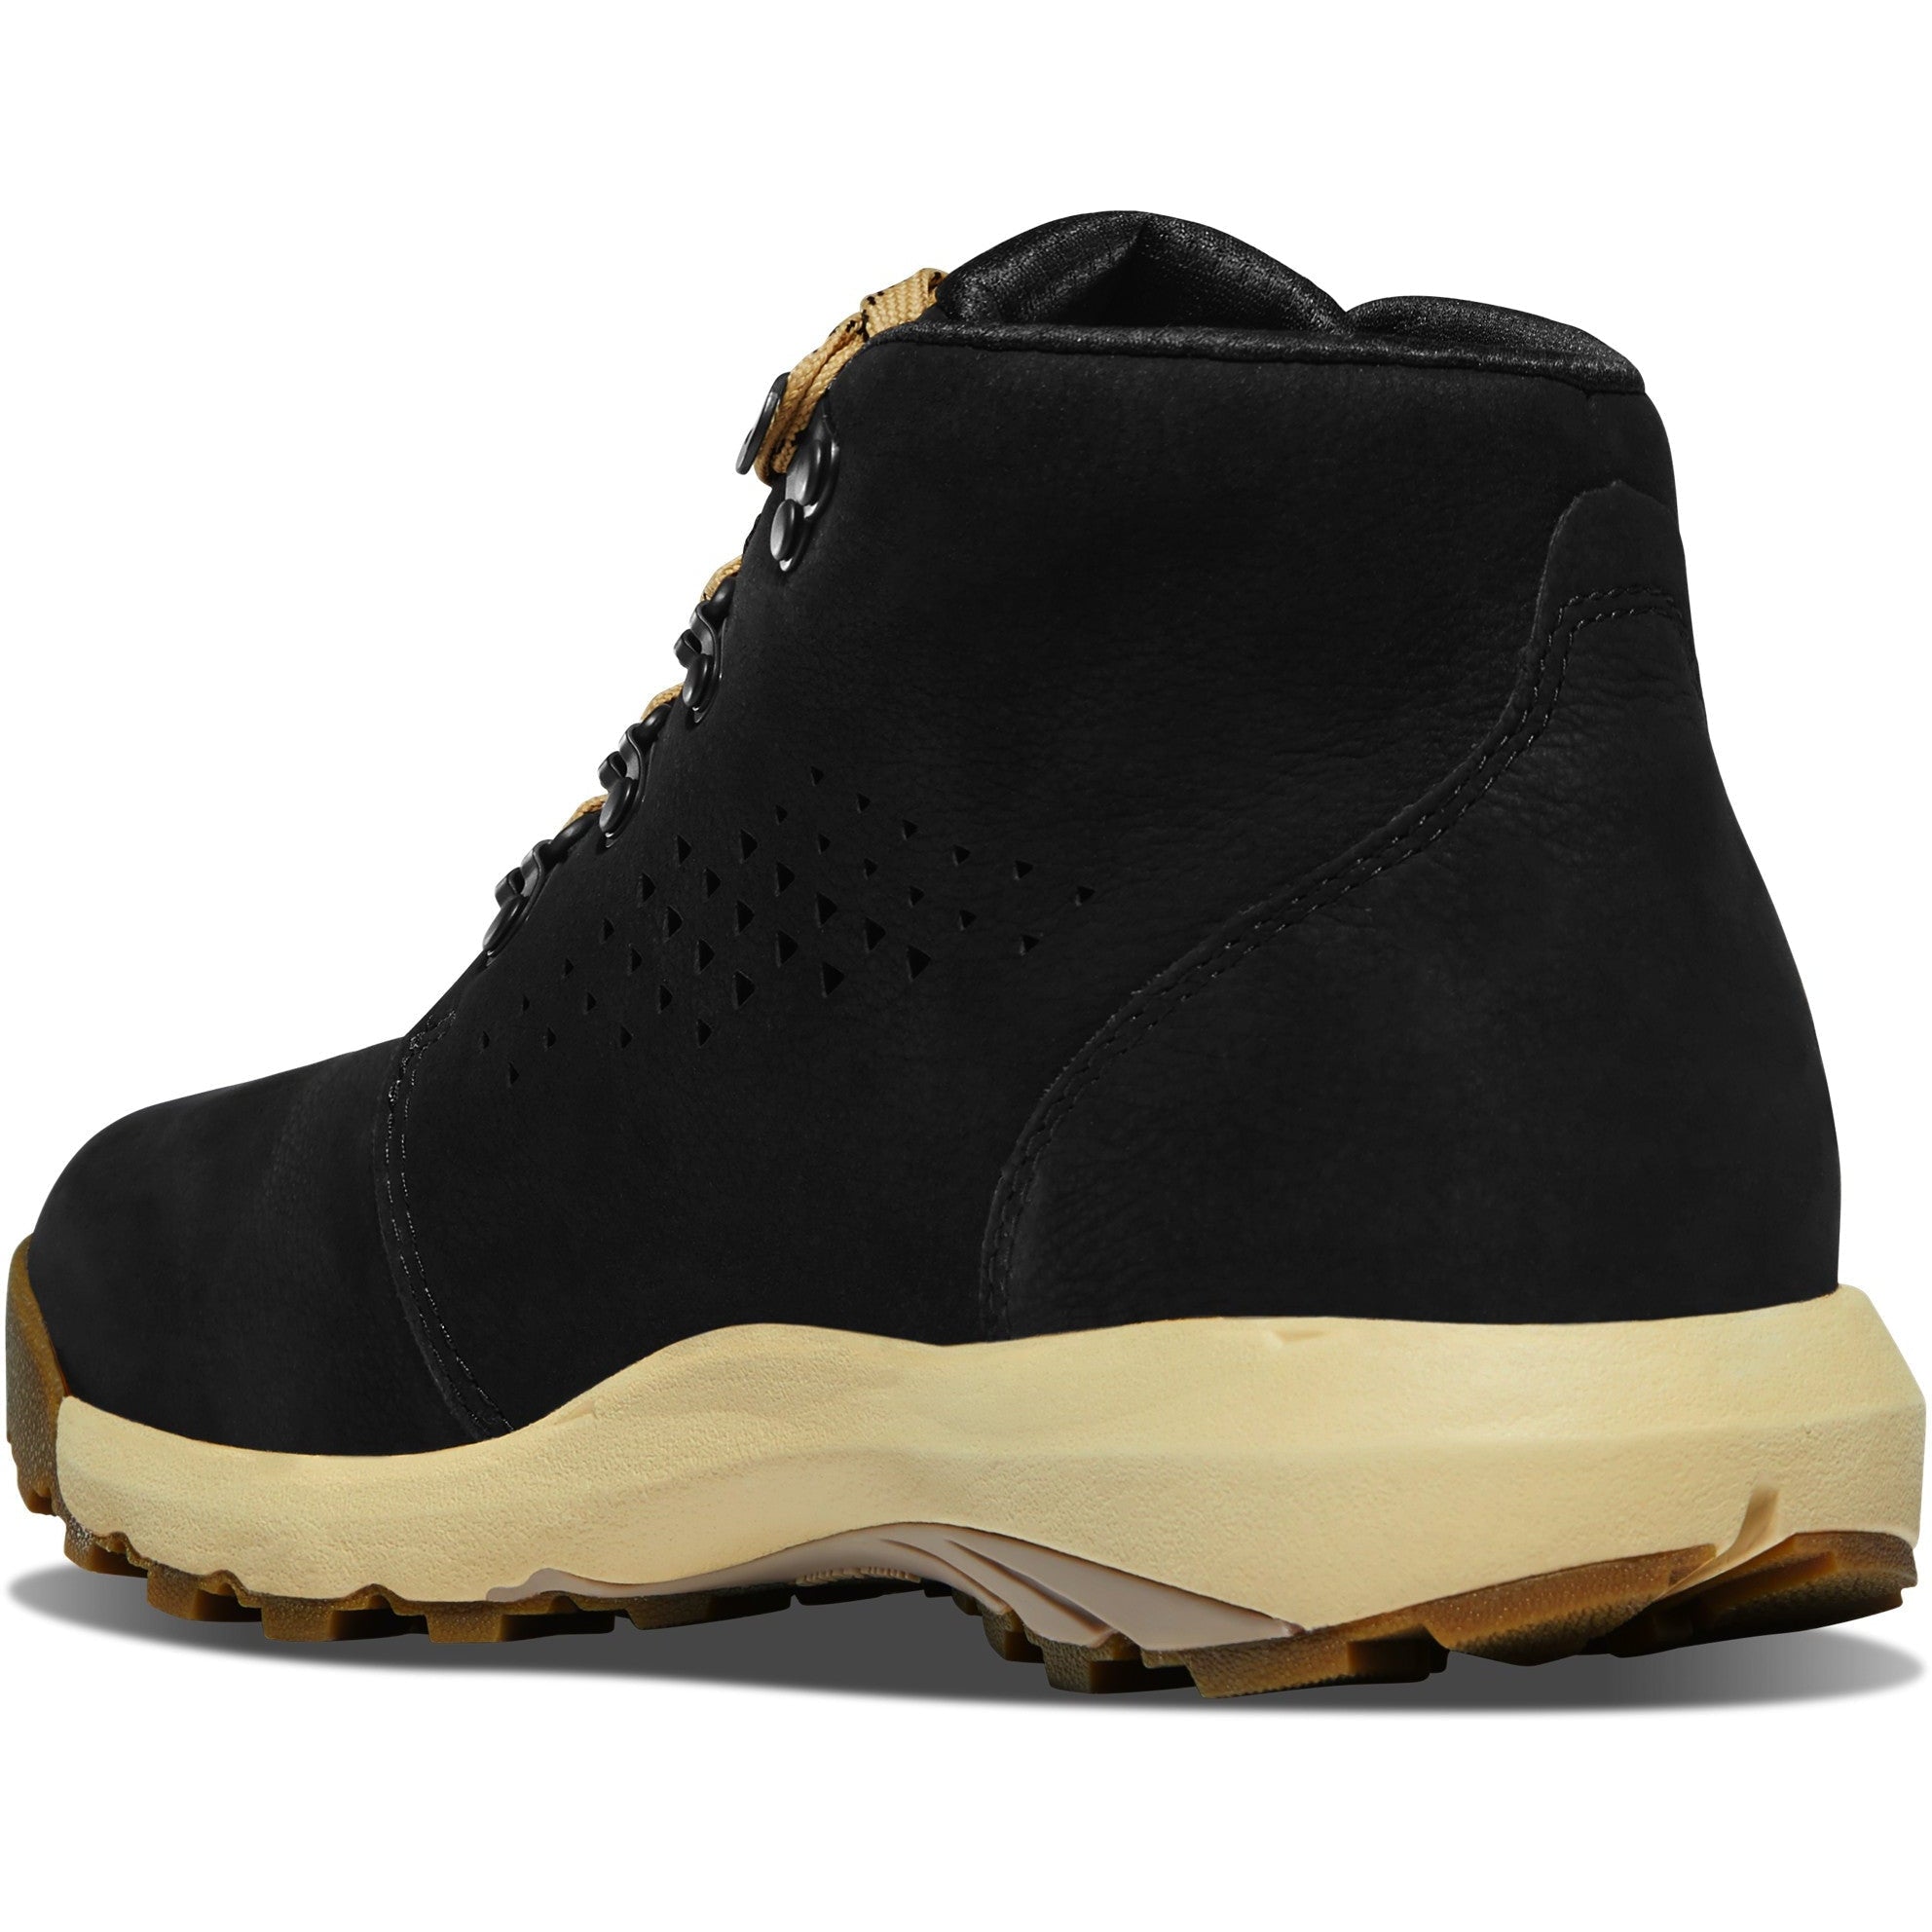 Danner Women's Inquire Chukka 4" WP Hiking Boot - Black - 64504  - Overlook Boots